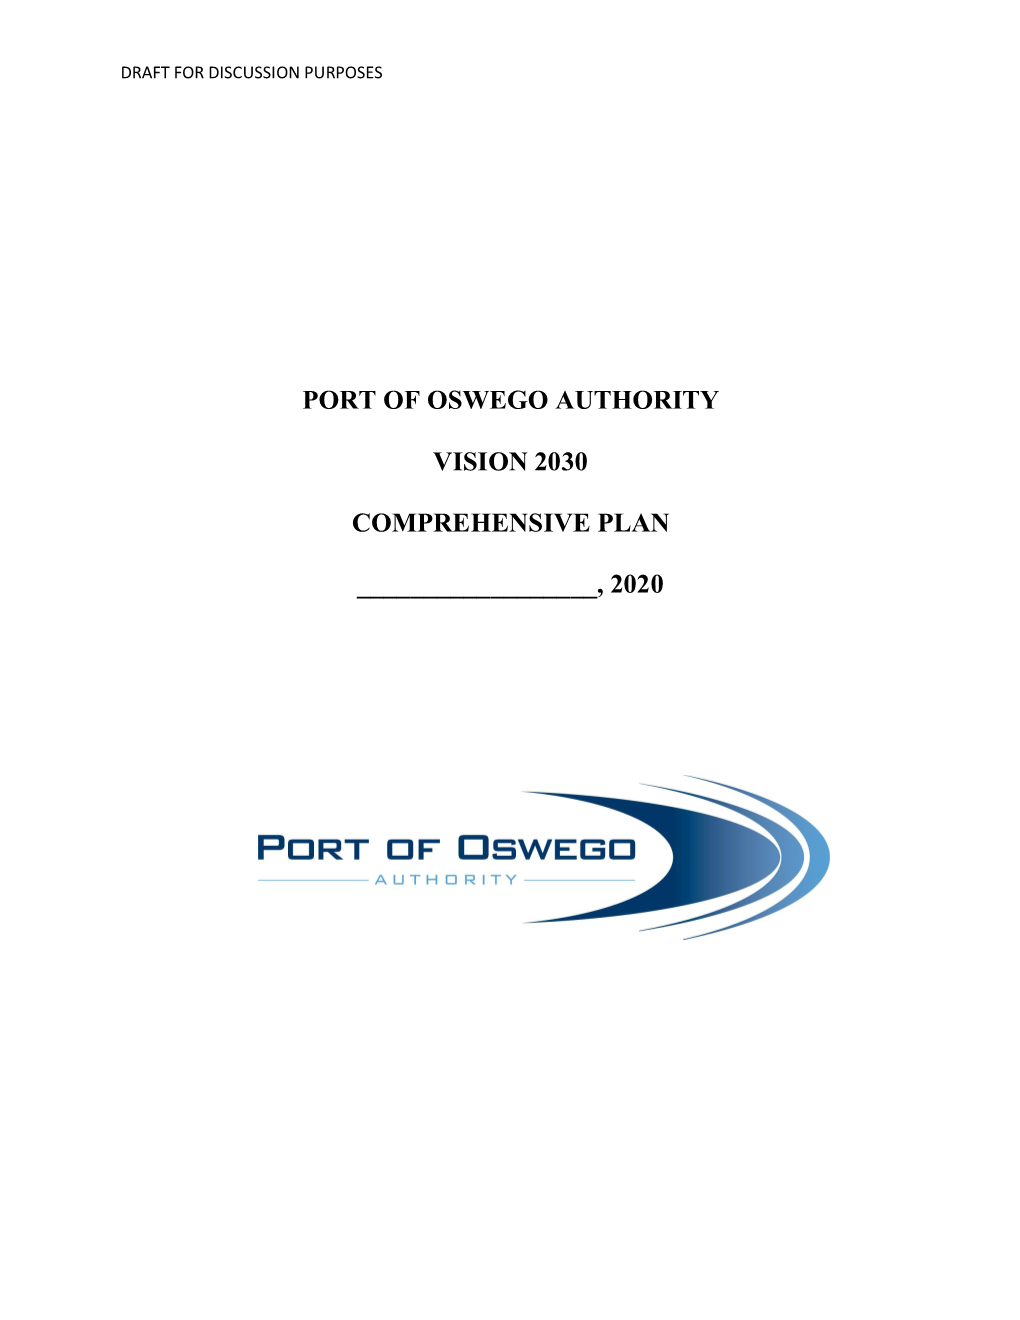 Port of Oswego Authority Vision 2030 Comprehensive